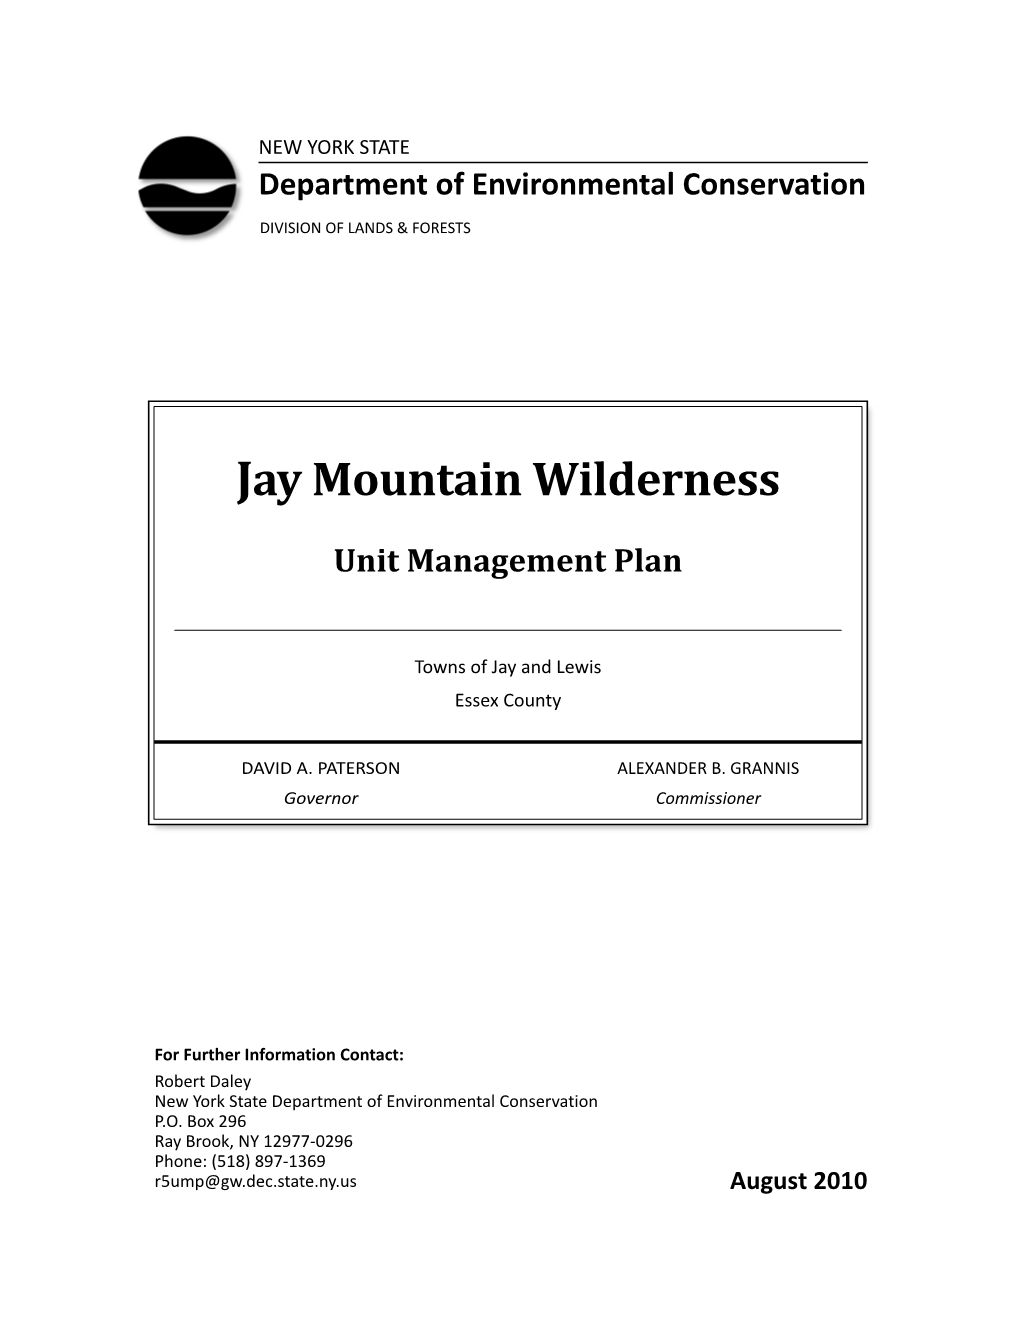 2010 Jay Mountain Wilderness Unit Management Plan